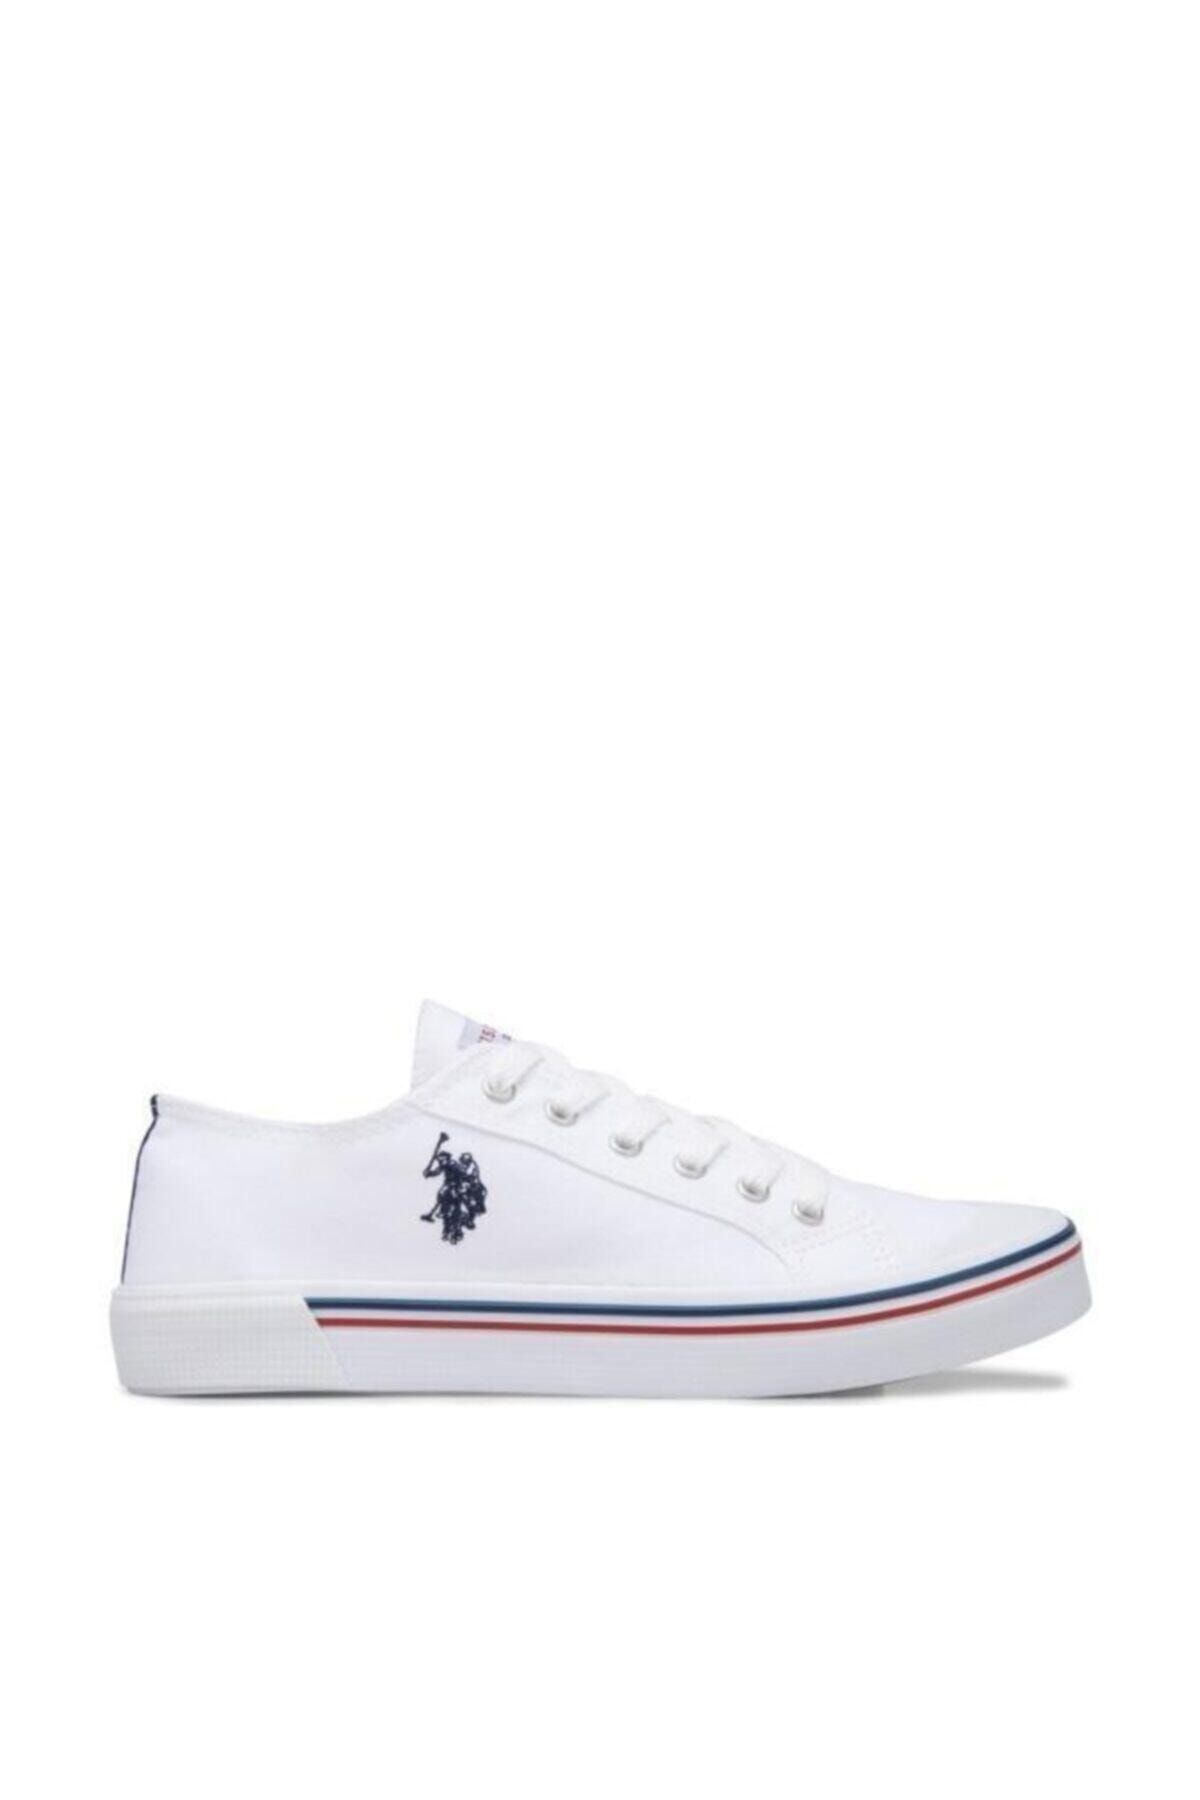 U.S. Polo Assn. Erkek Beyaz Sneaker 100248650